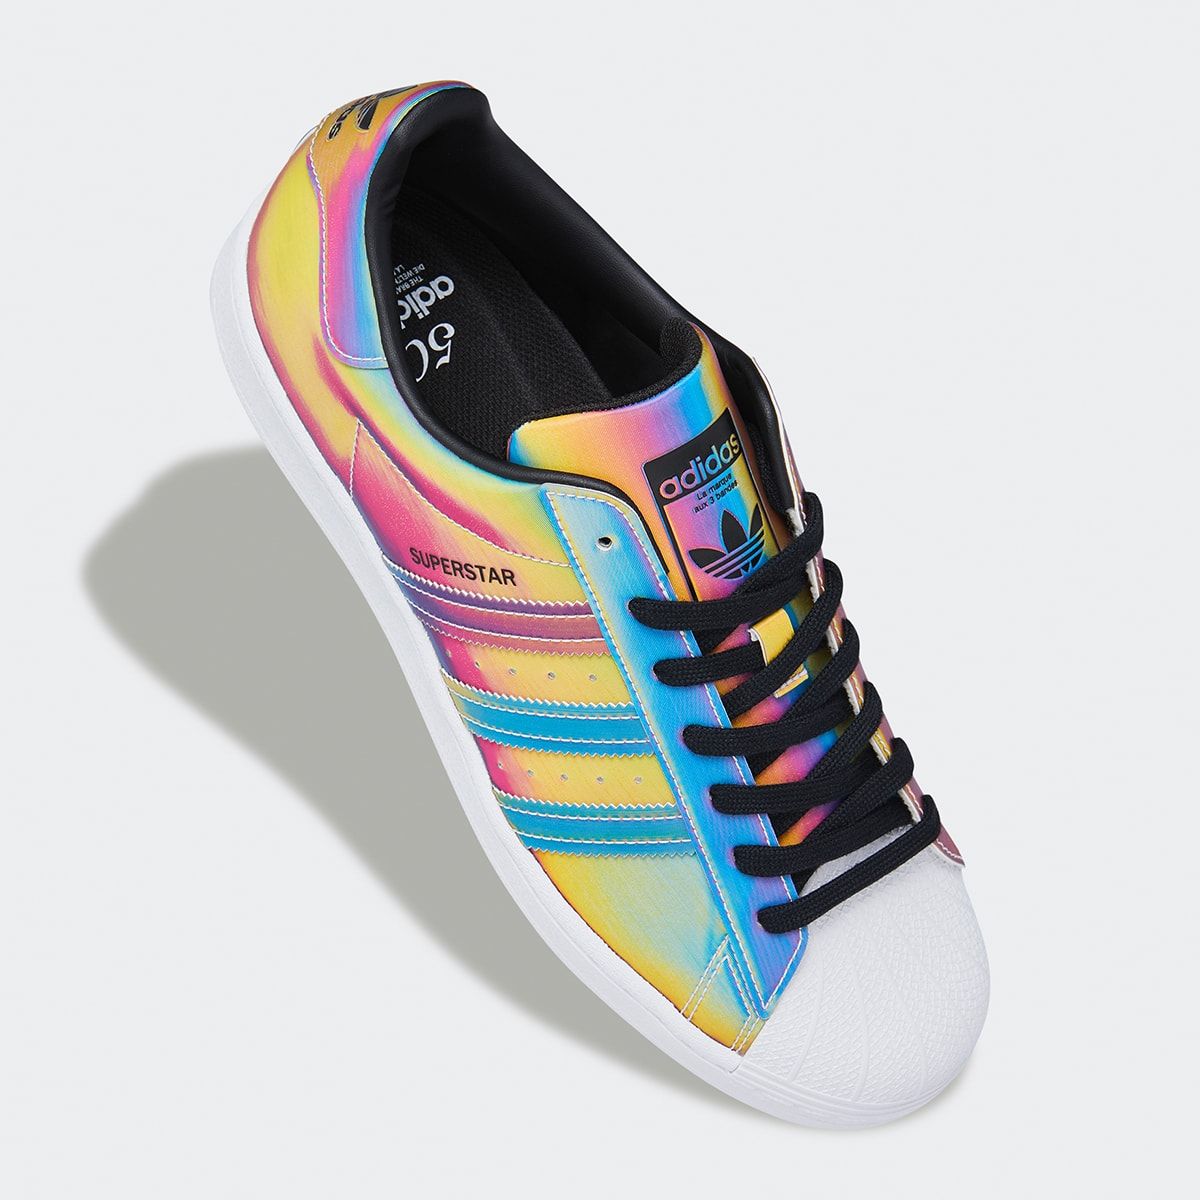 Adidas Superstar Iridescent Stripes Online Sale, UP TO 50% OFF